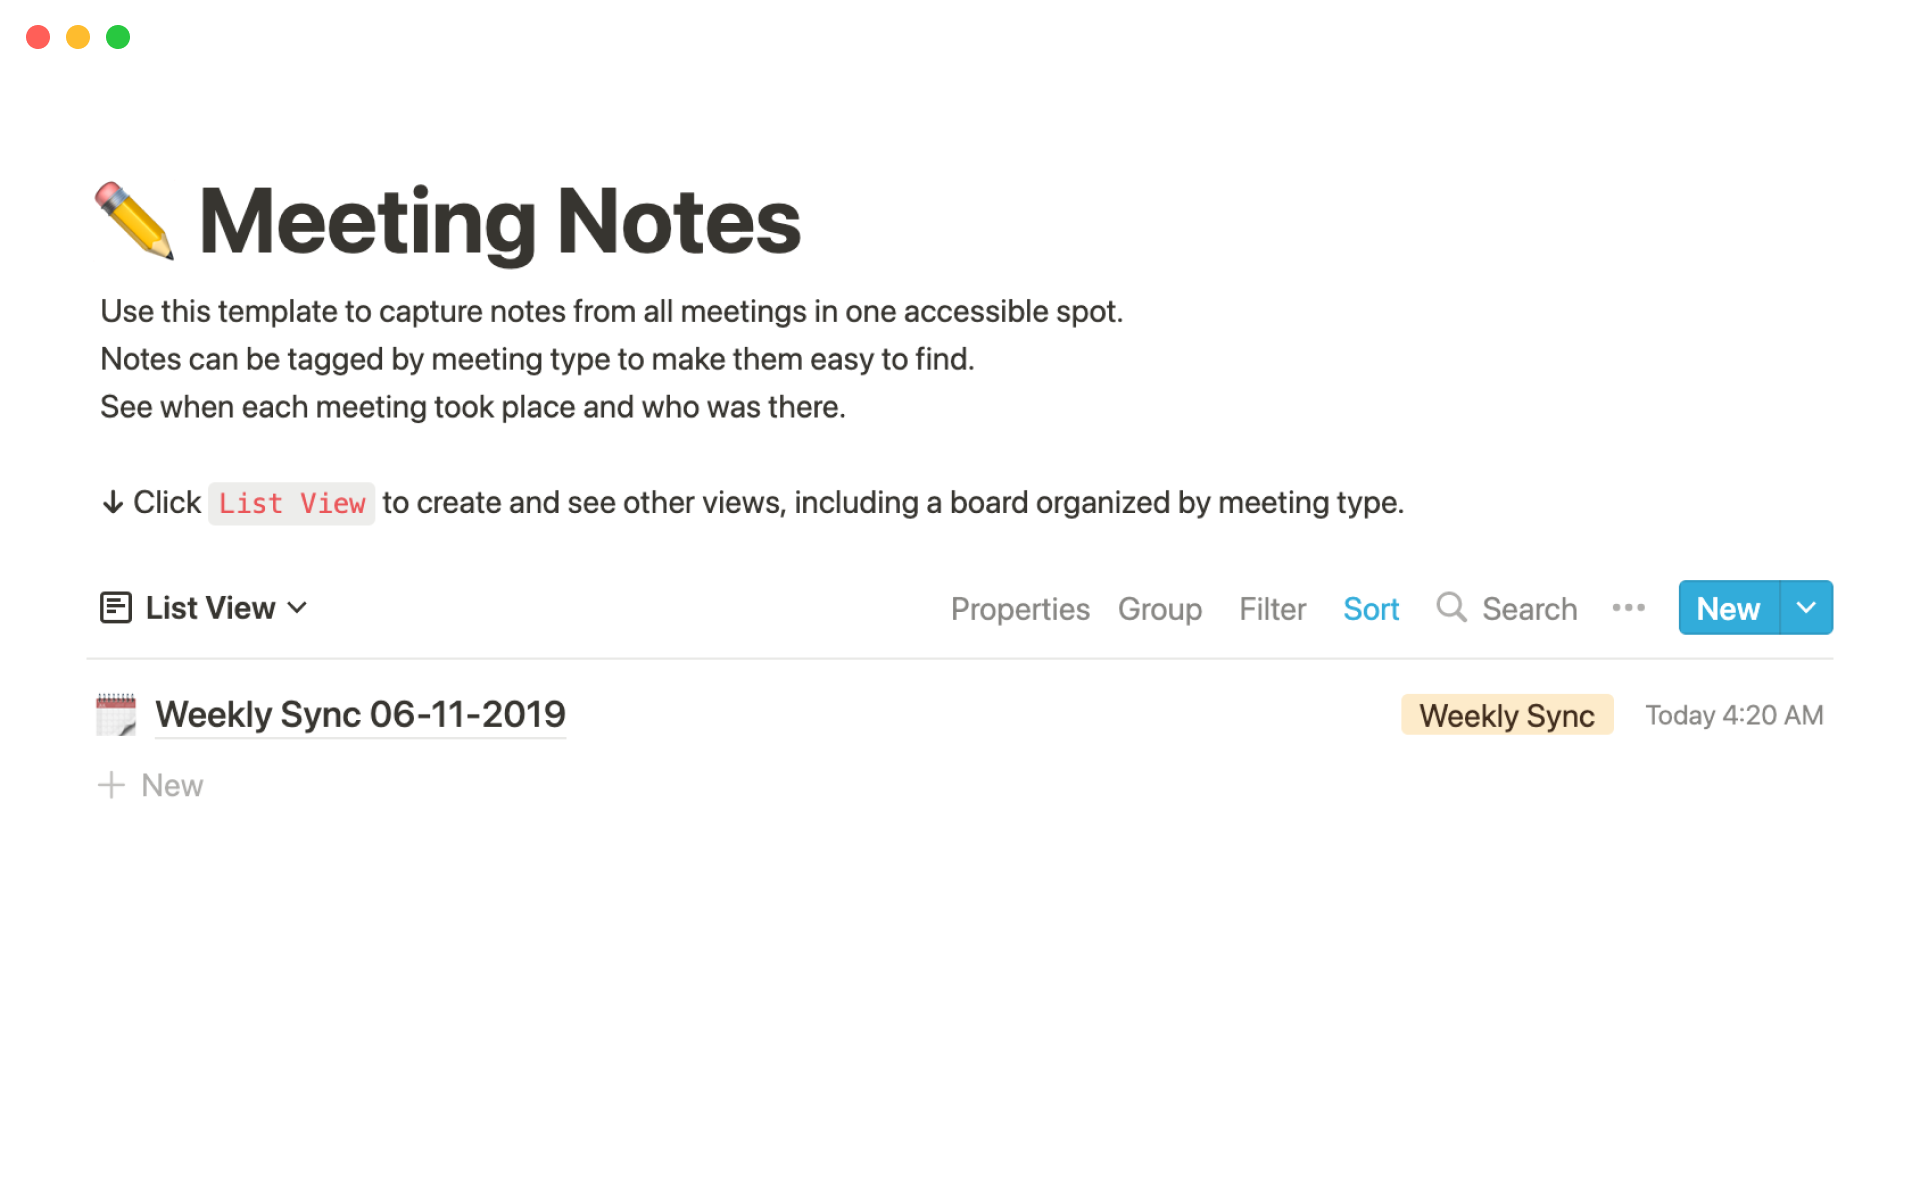 En forhåndsvisning av mal for Marketing meeting notes